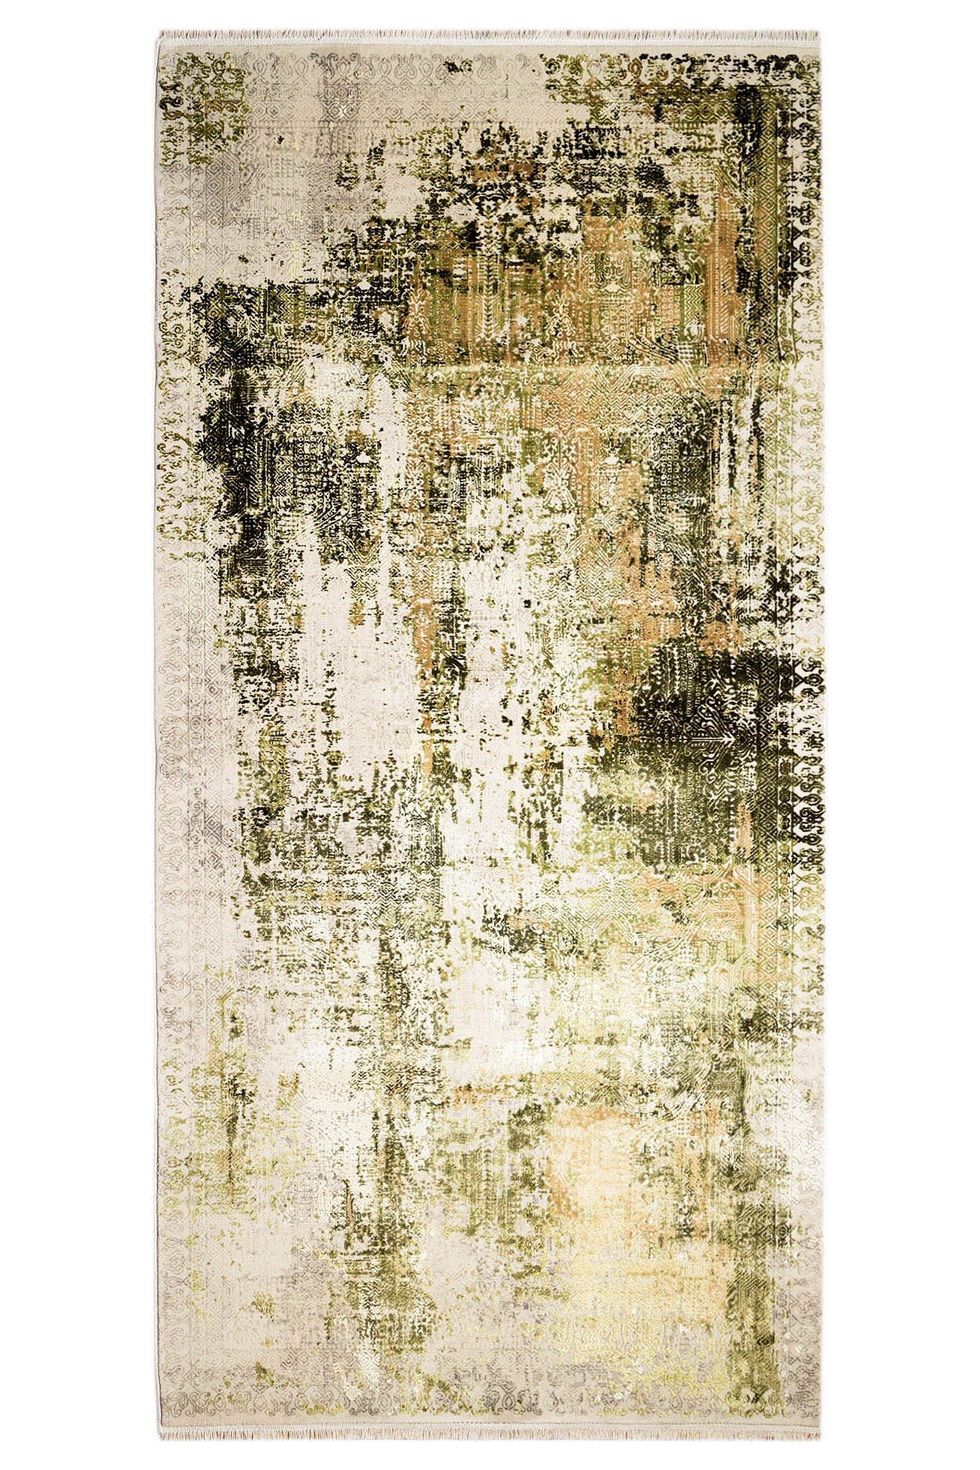 #Turkish_Carpets_Rugs# #Modern_Carpets# #Abrash_Carpets#Abrash-18009464-200x100